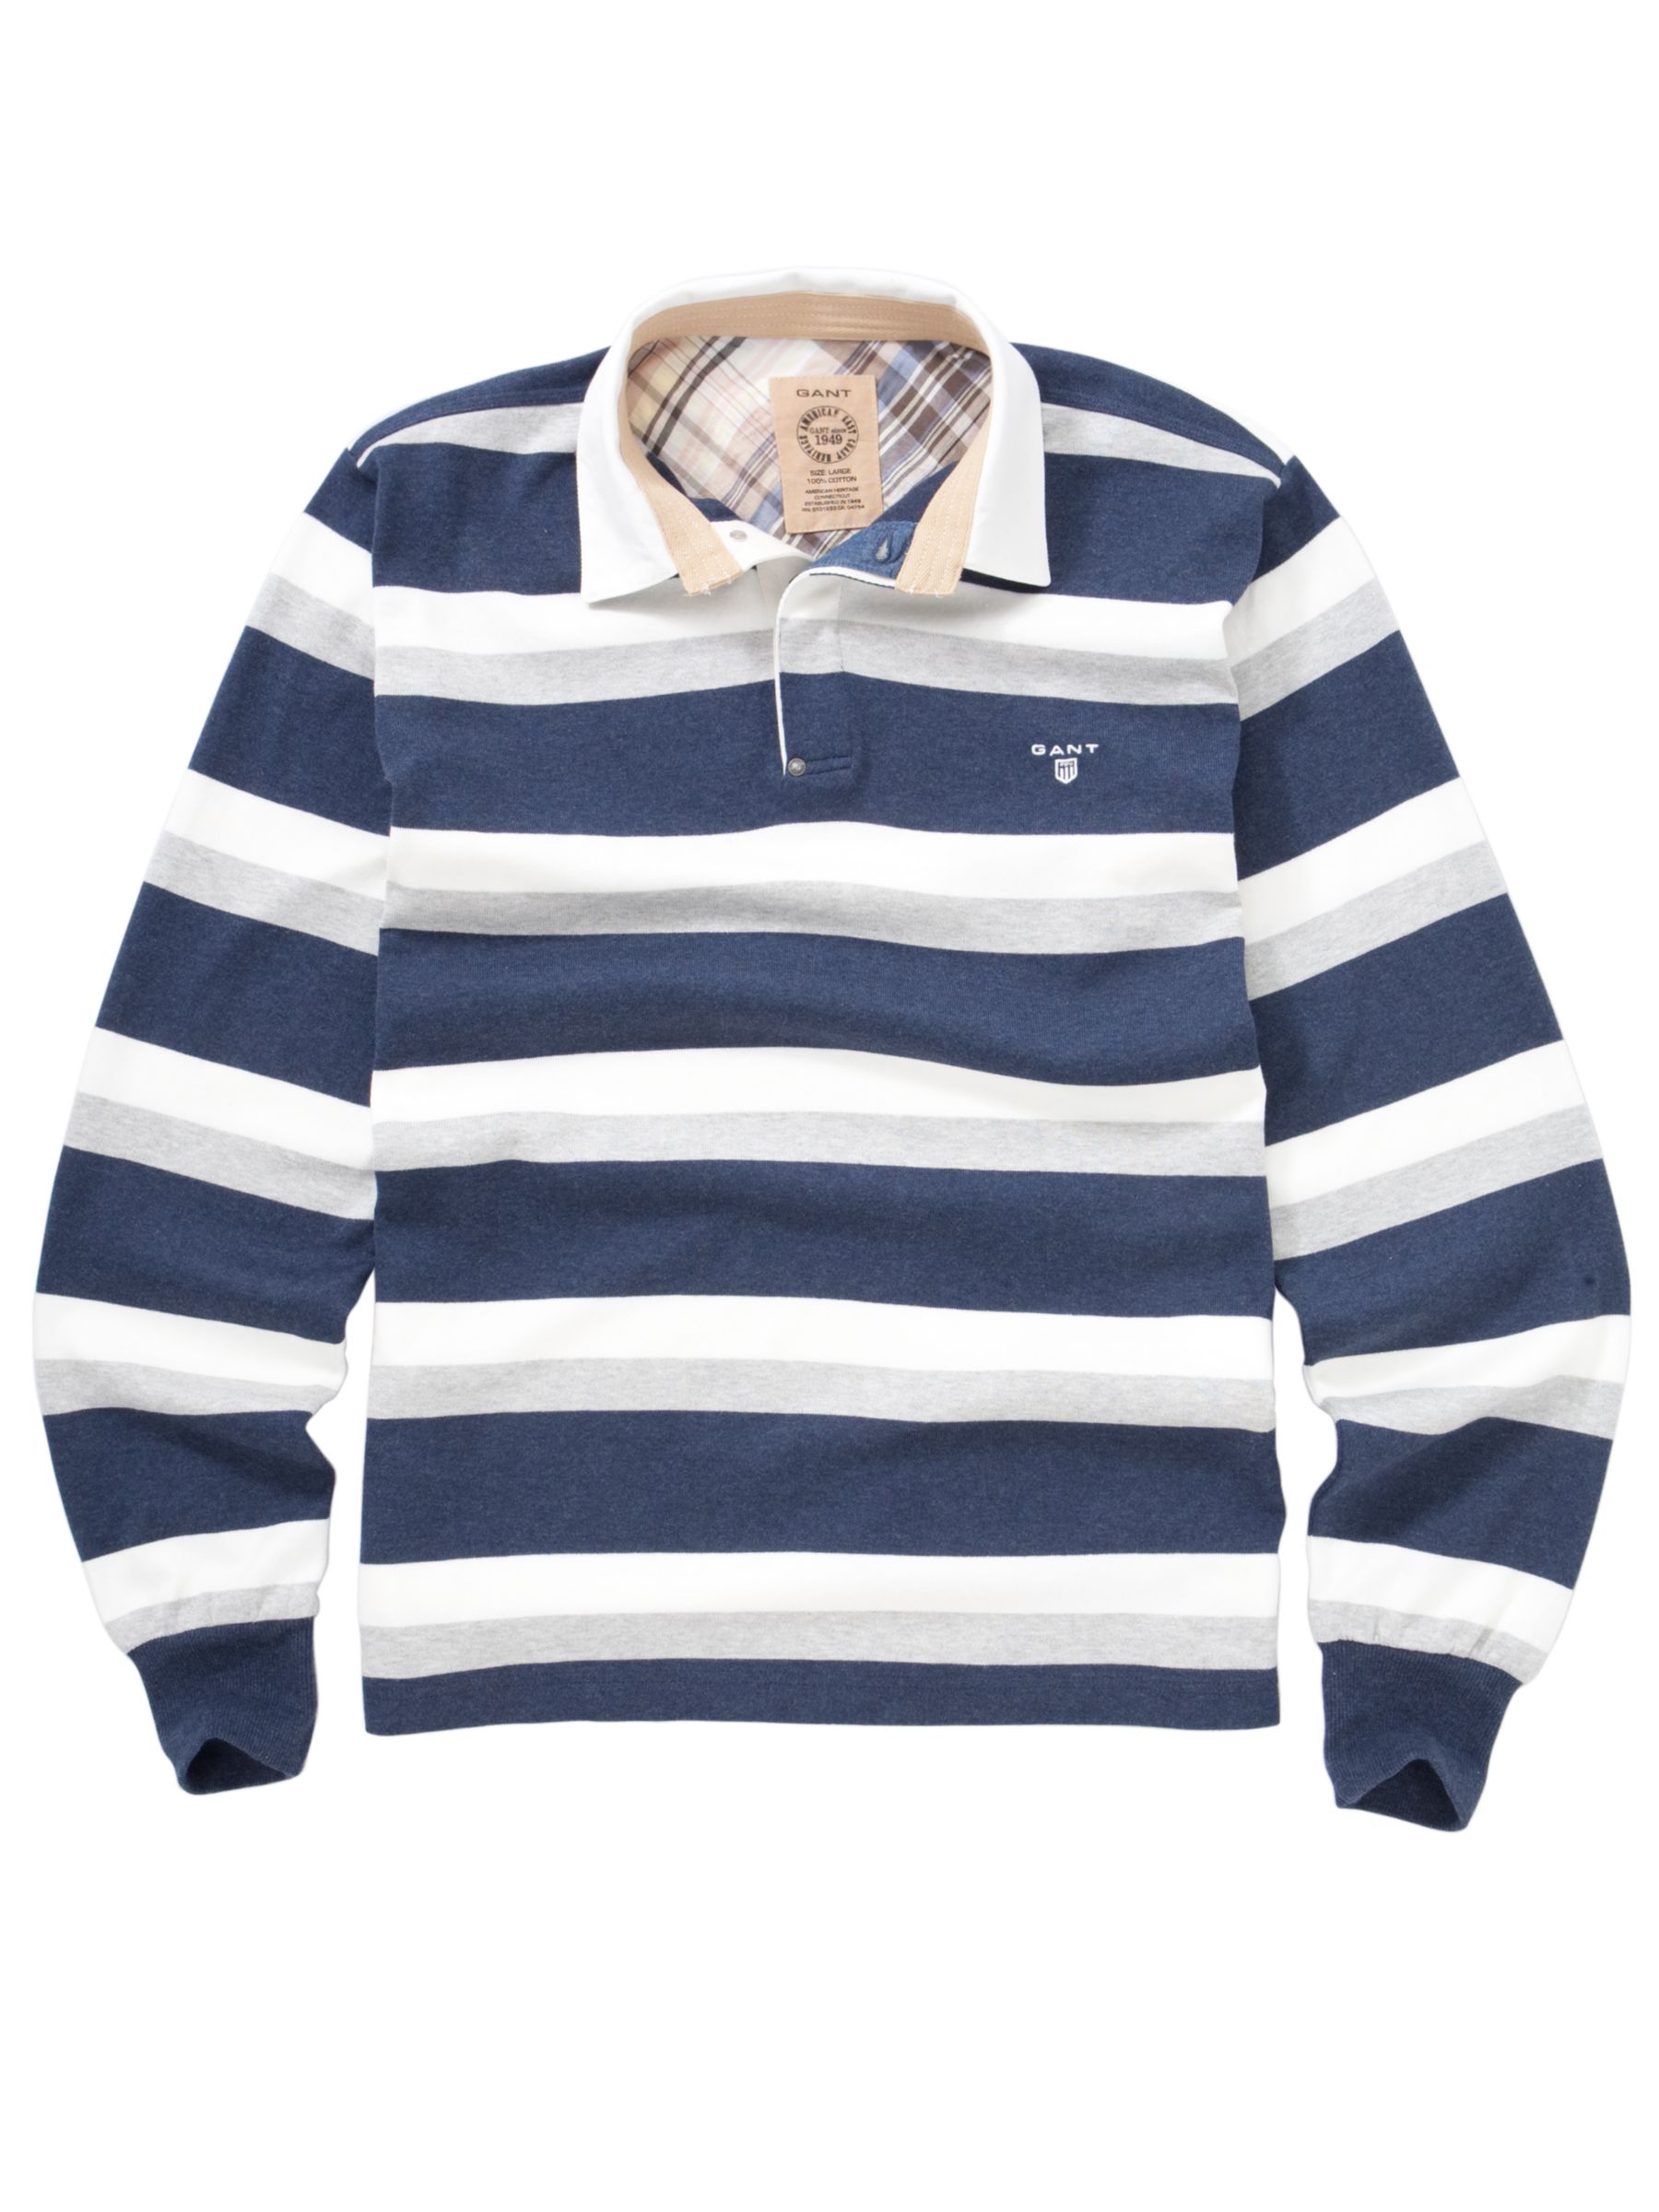 Sunset Breton Stripe Rugby Shirt,